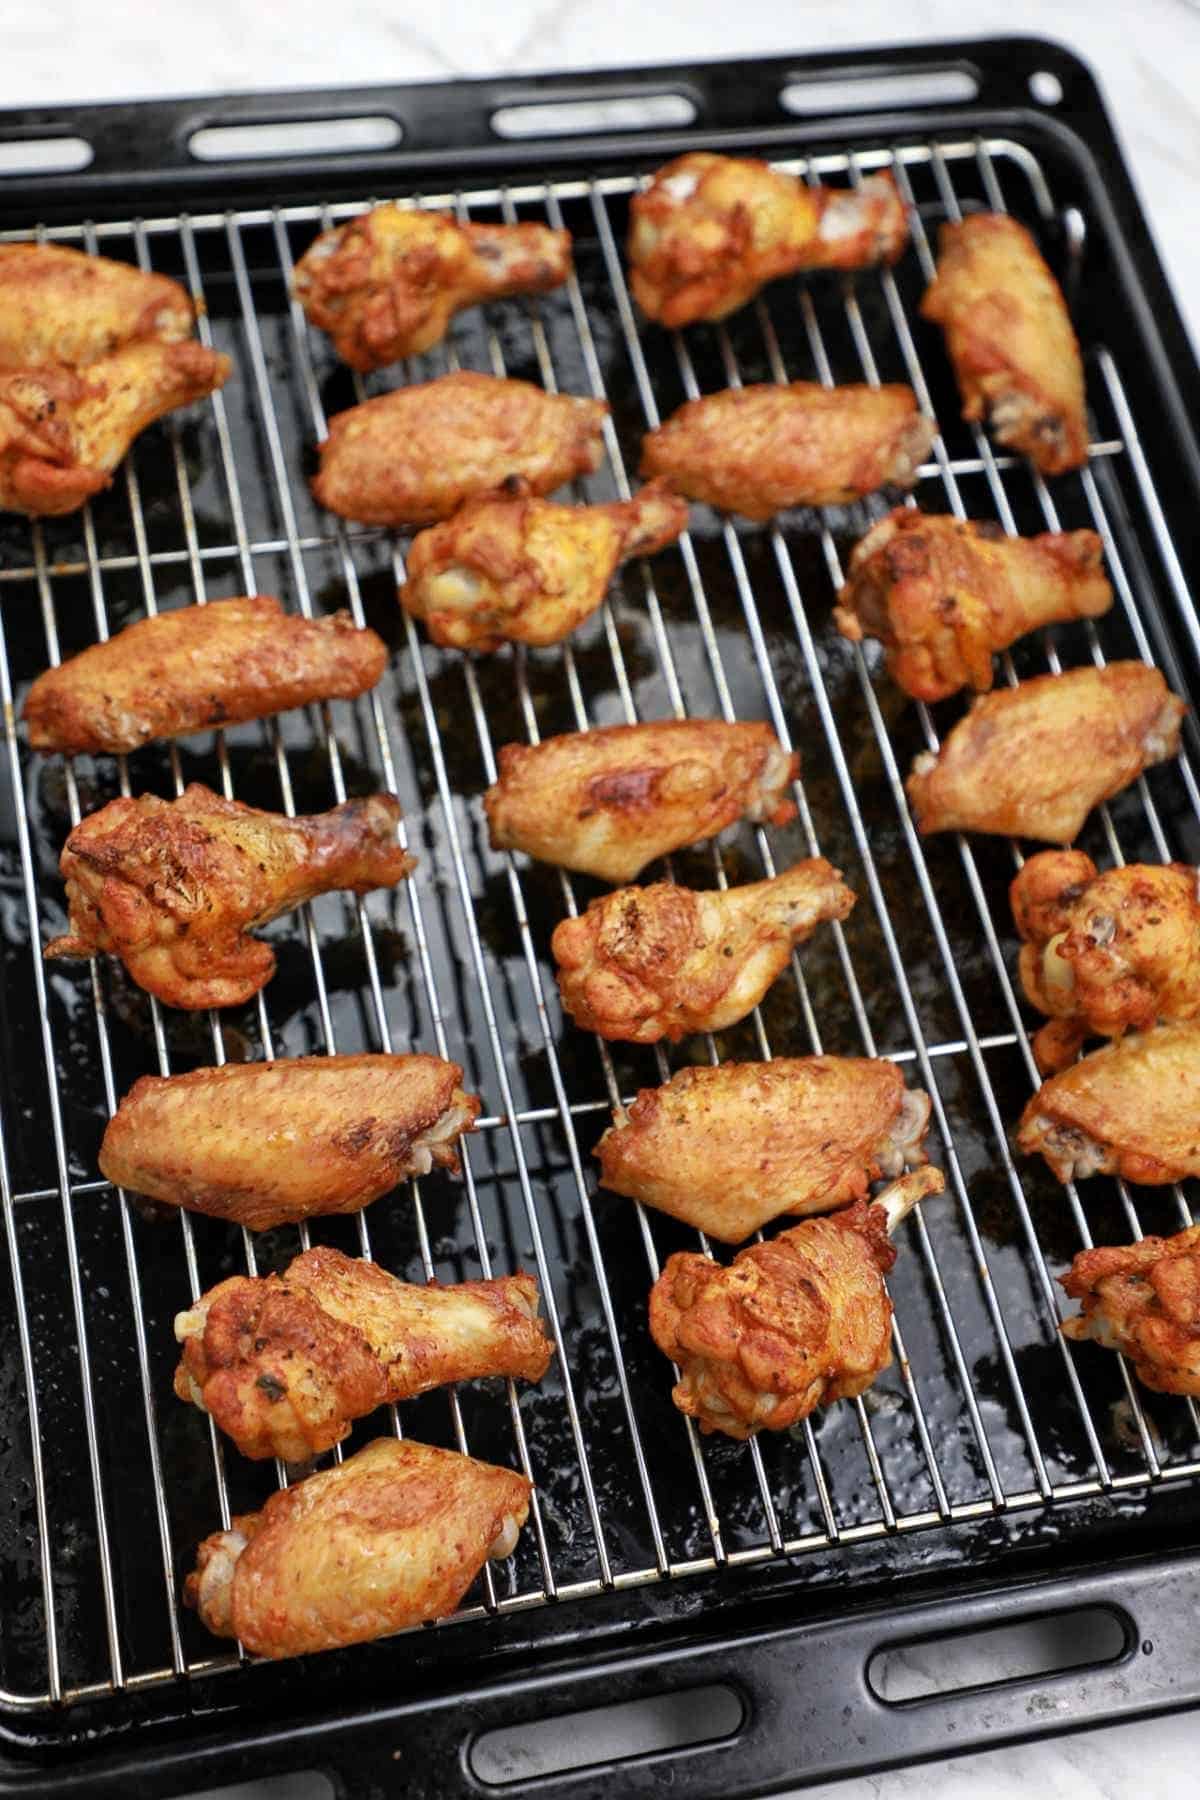 baked crispy wings on a baking tray.